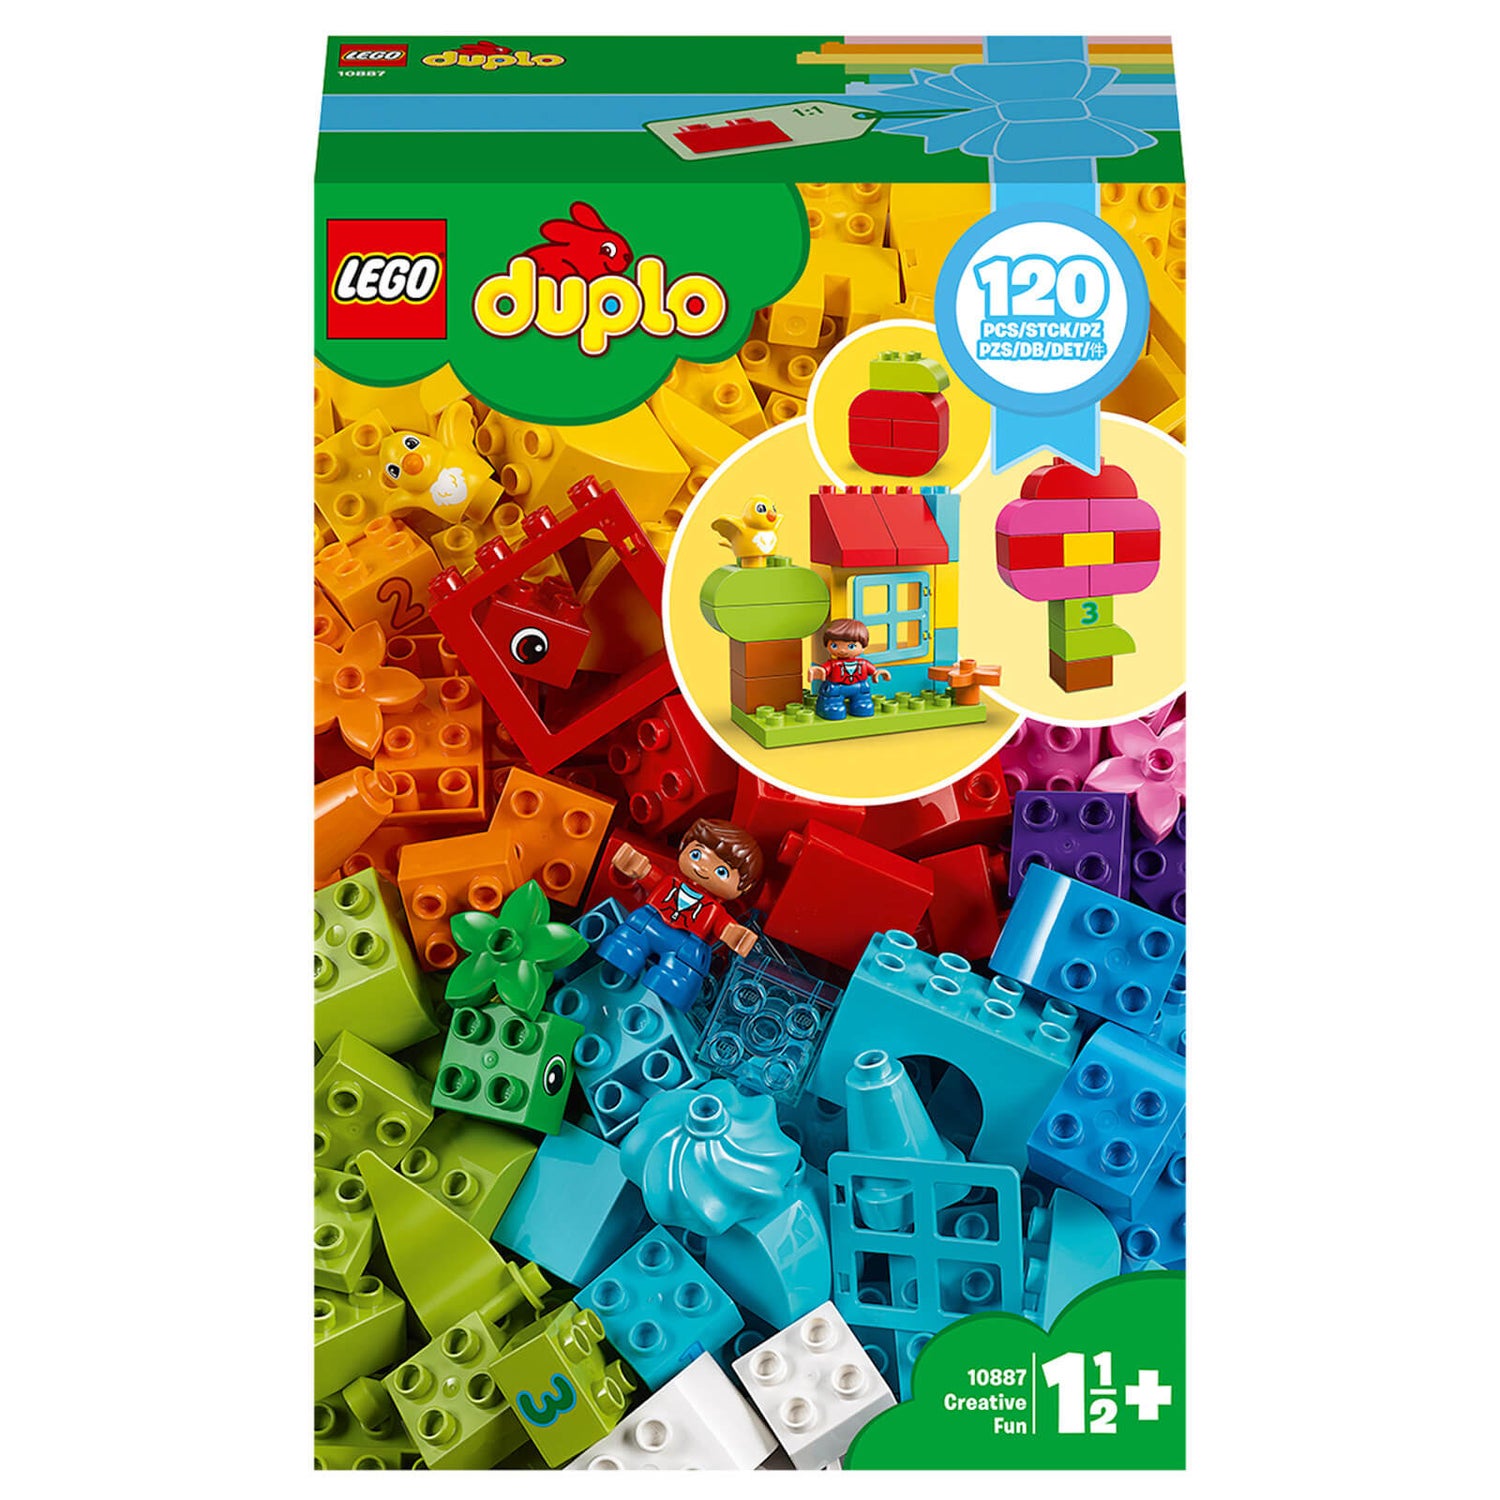 LEGO Duplo: Creative Fun Building Set (10887)